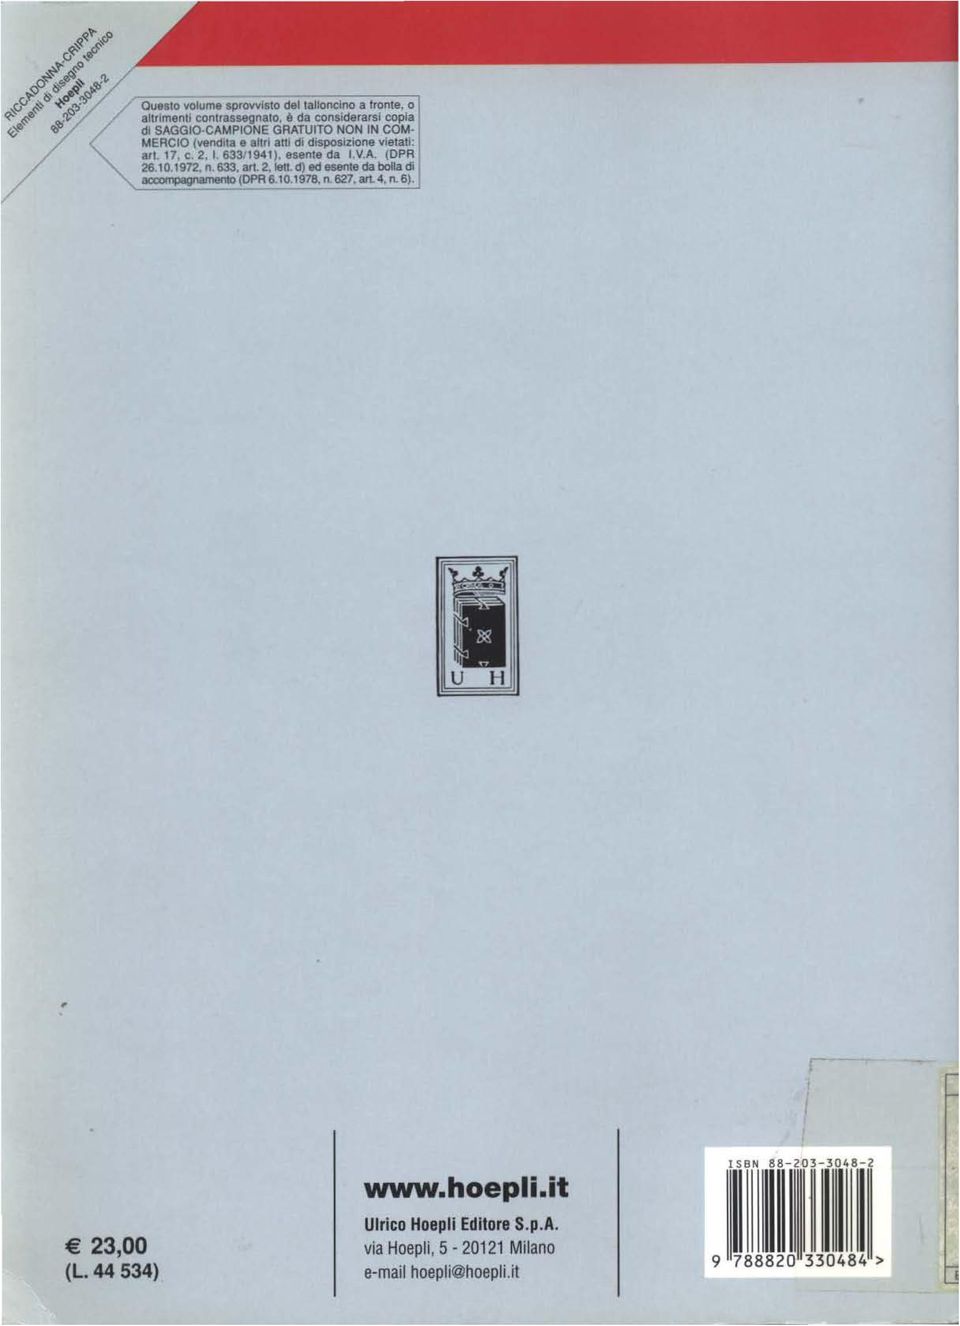 2, I. 633/1941), esente da I.V.A (DPR 26.10.1972, n. 633, art. 2. lett. d) ed esente da bolla do accompagnamento (DPR 6.10.1978, n.